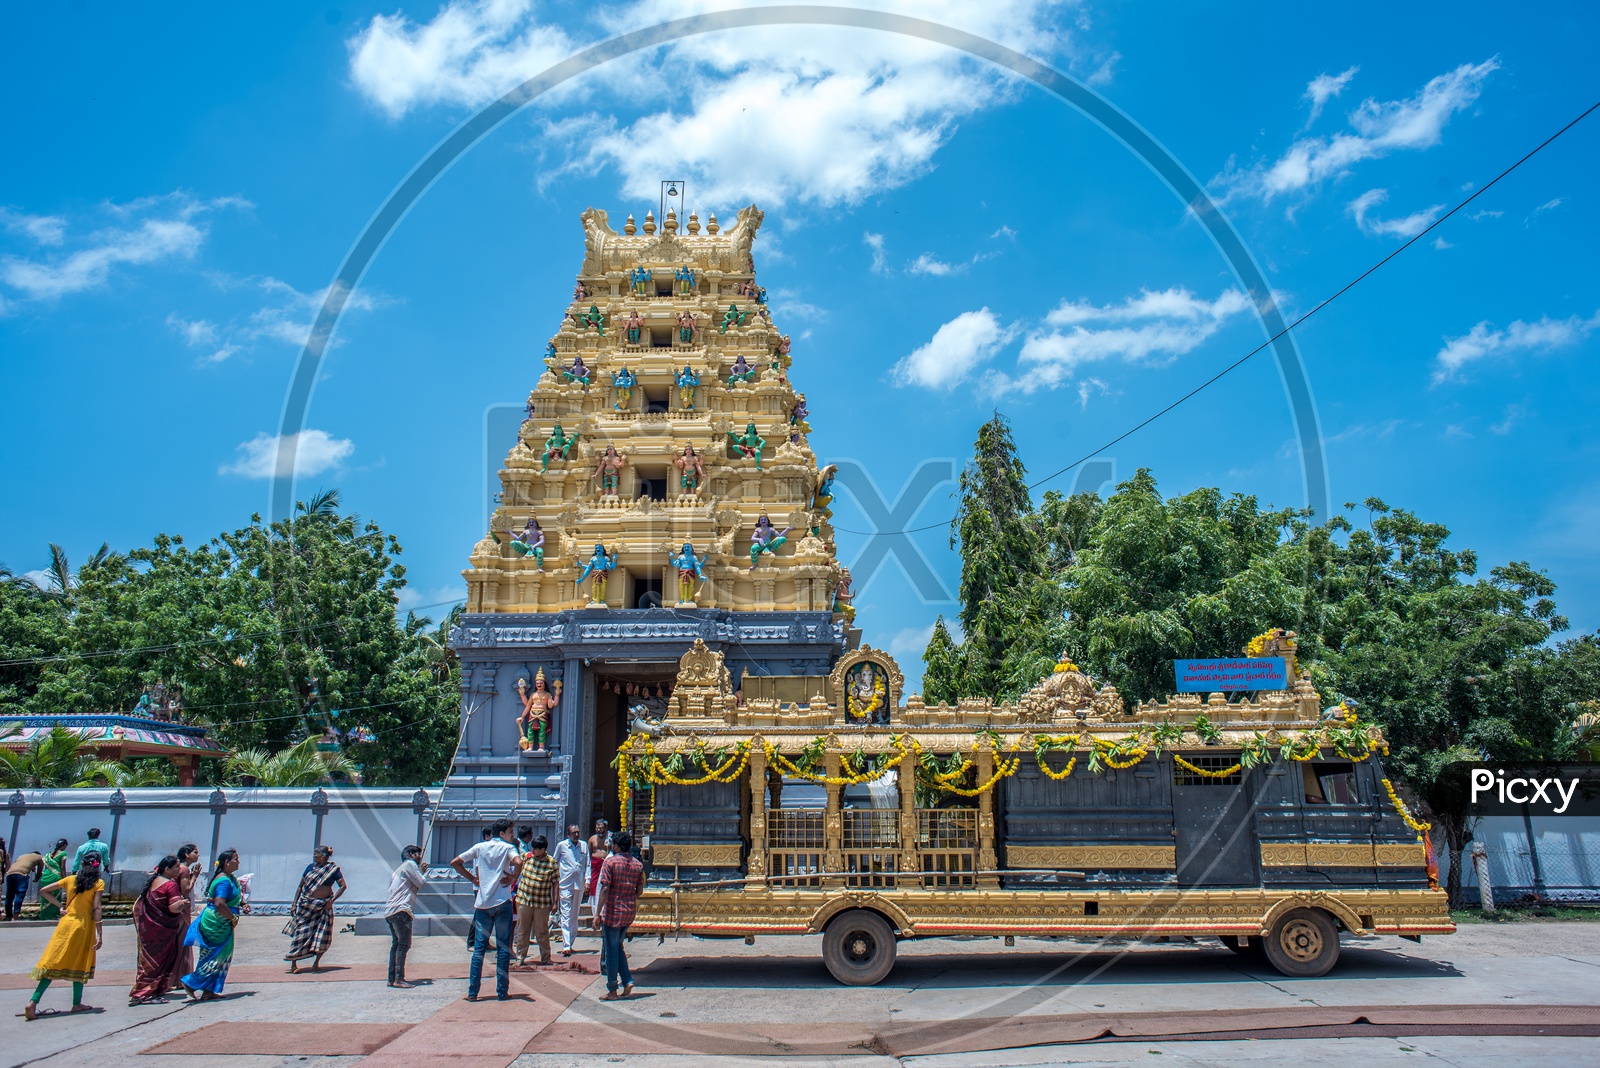 Decorated vehicle in front of  Sri lakshmi narasimha swami temple